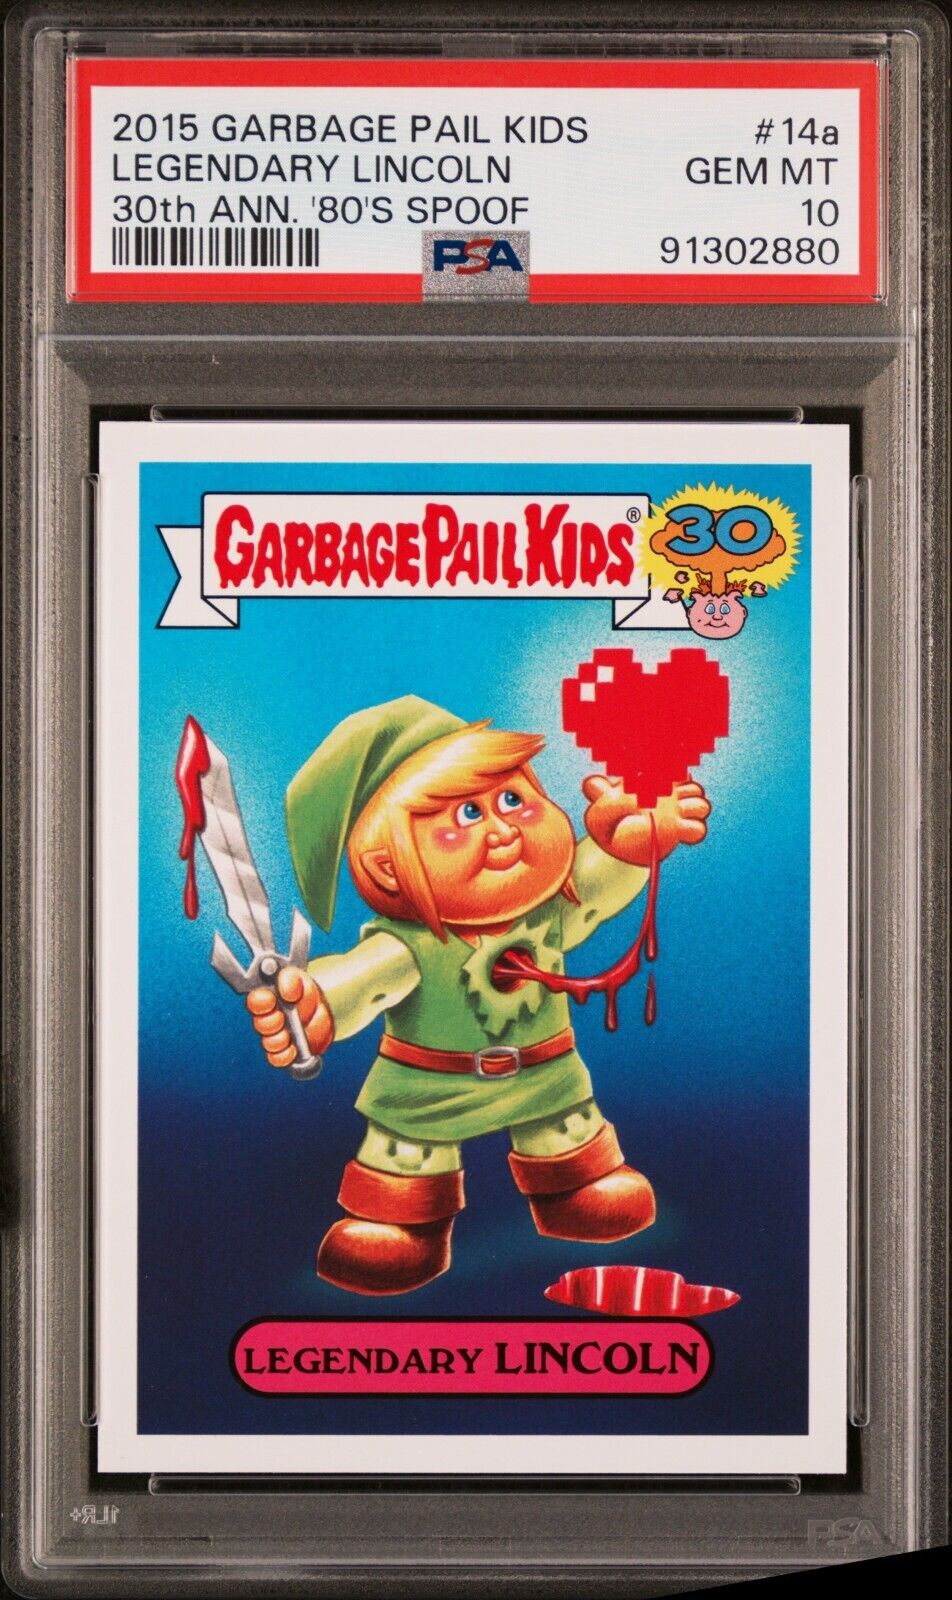 2015 Garbage Pail Kids 30th Anniversary LEGENDARY LINCOLN Link 14a PSA 10 Zelda